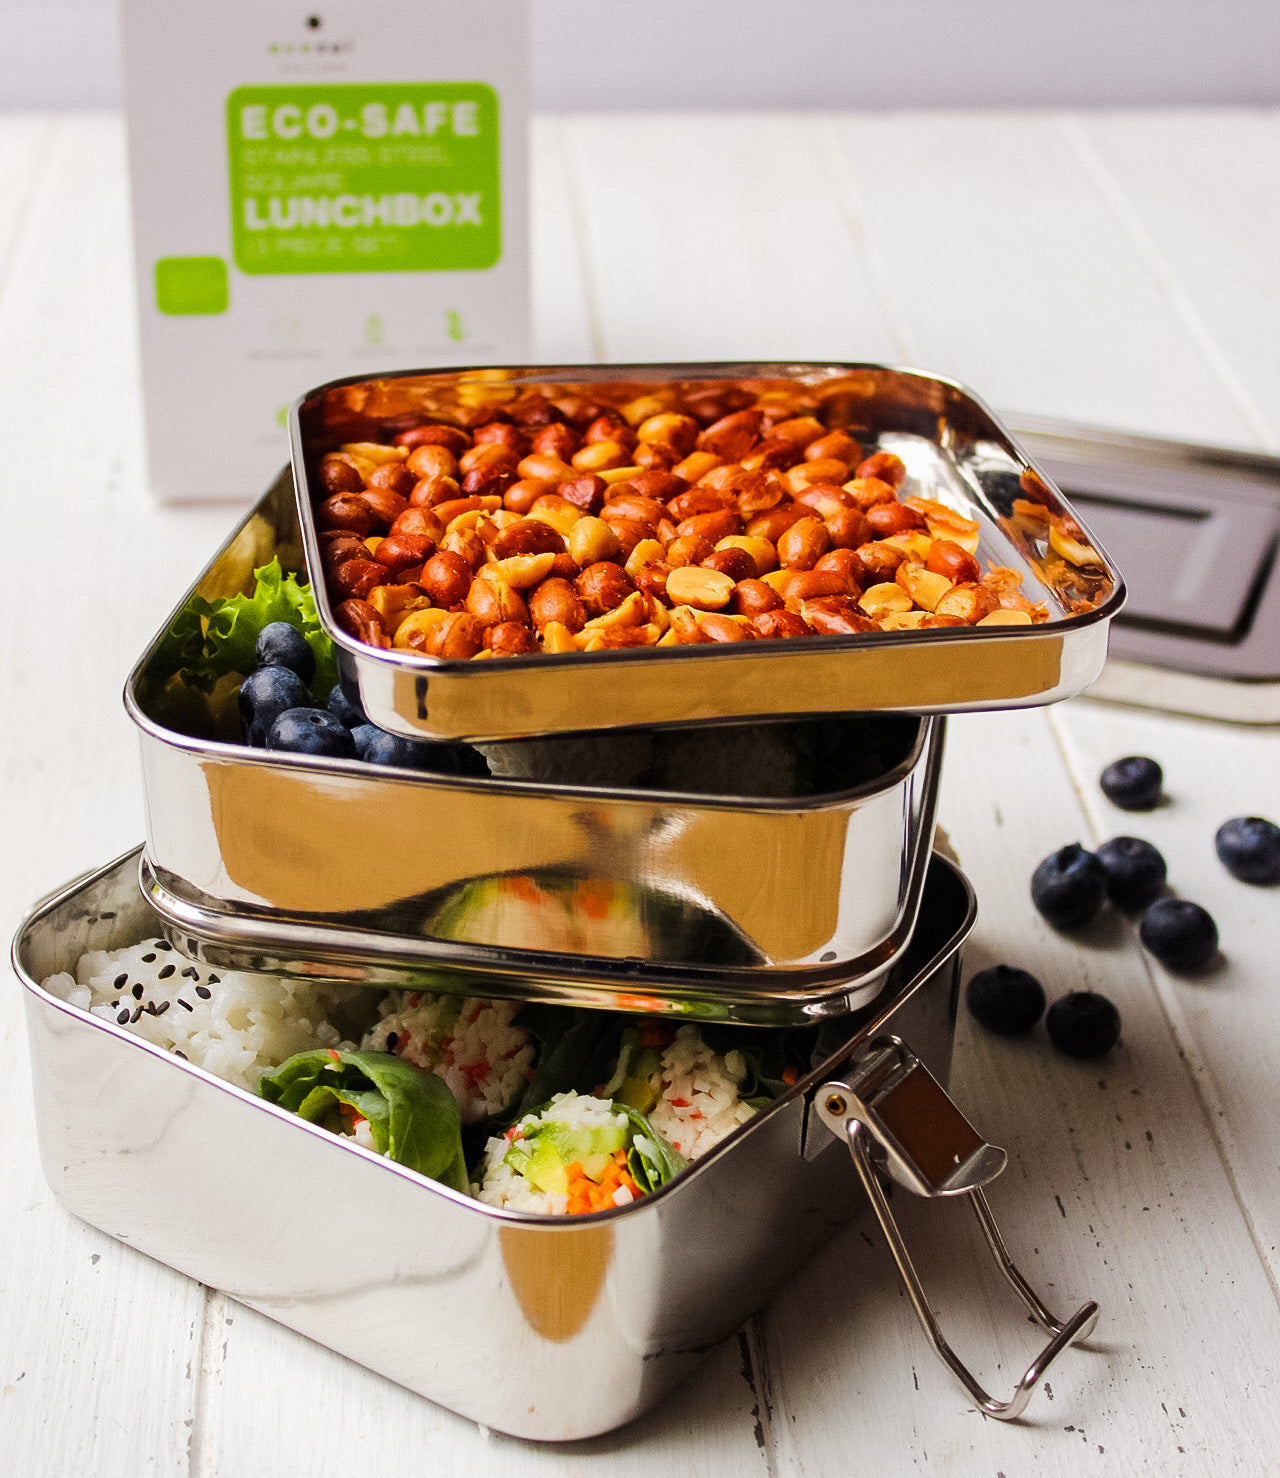 Ecozoi Stainless Steel Lunch Box, Leak Proof 1-Tier Eco Metal Bento Box  with Bonus POD